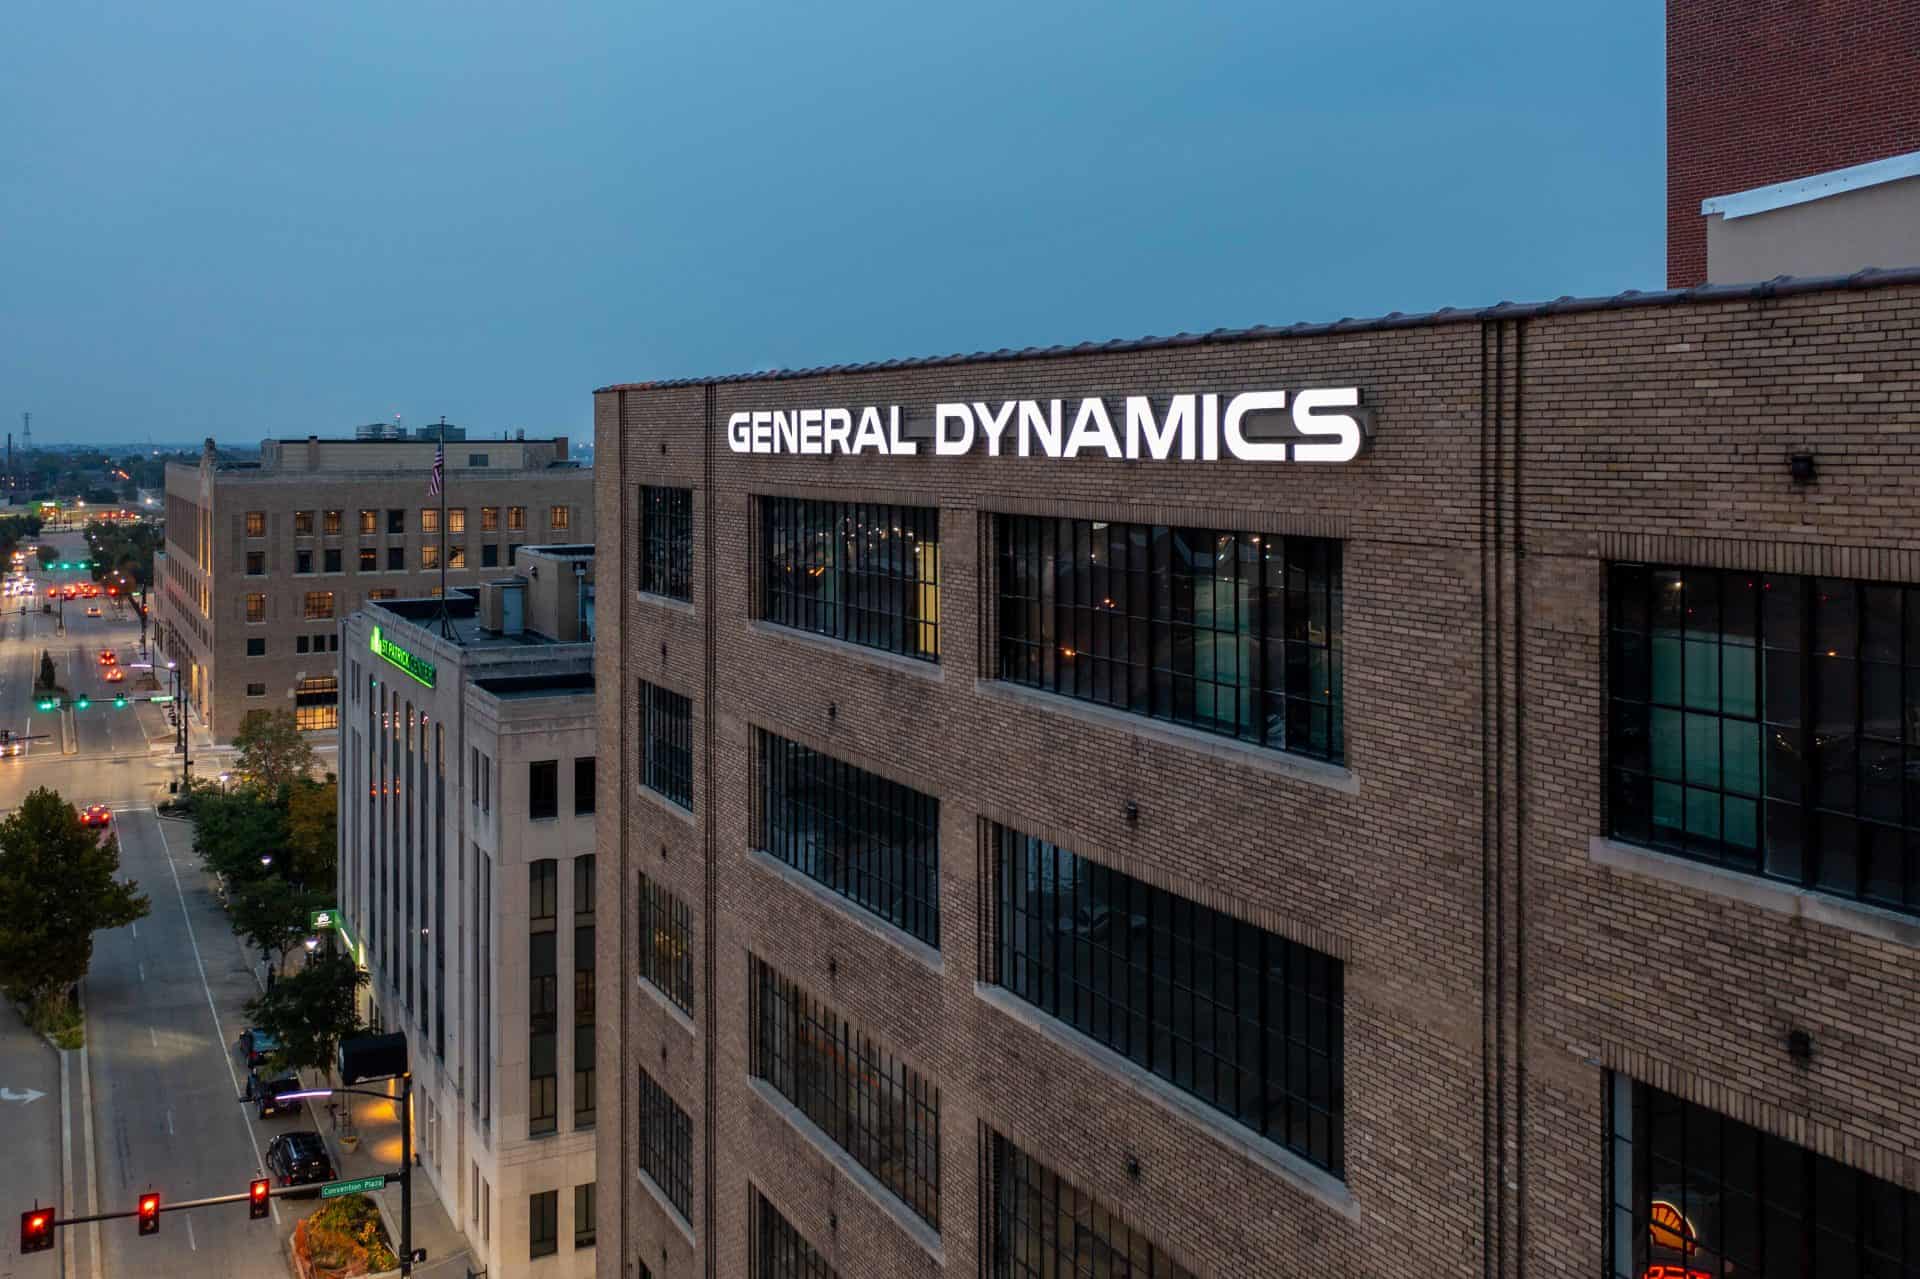 Illuminating building sign for General Dynamics Illuminates white